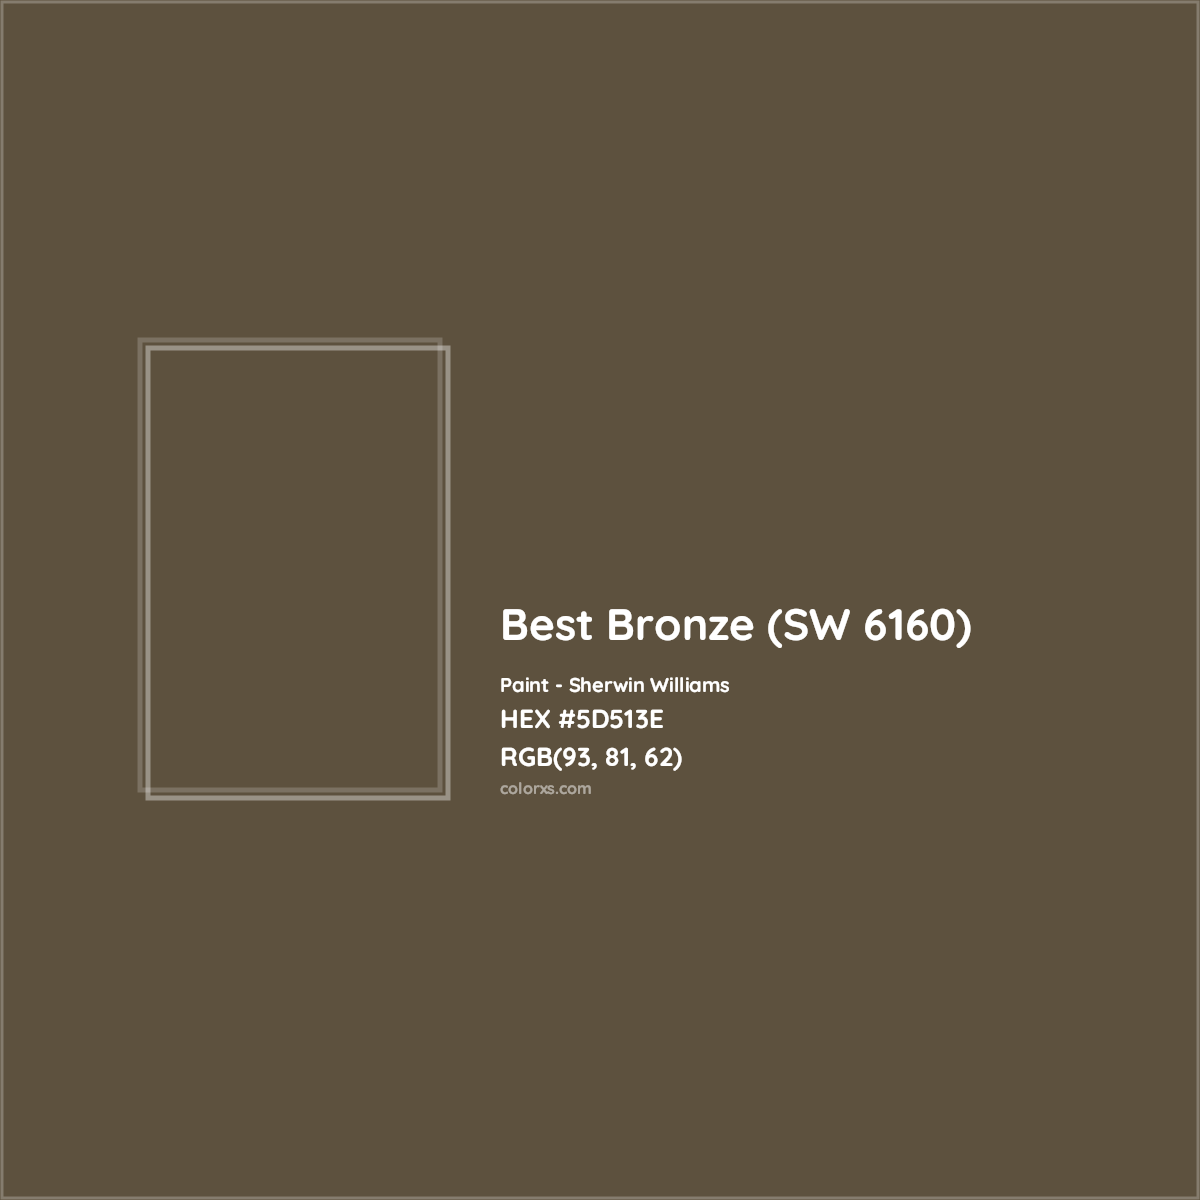 HEX #5D513E Best Bronze (SW 6160) Paint Sherwin Williams - Color Code